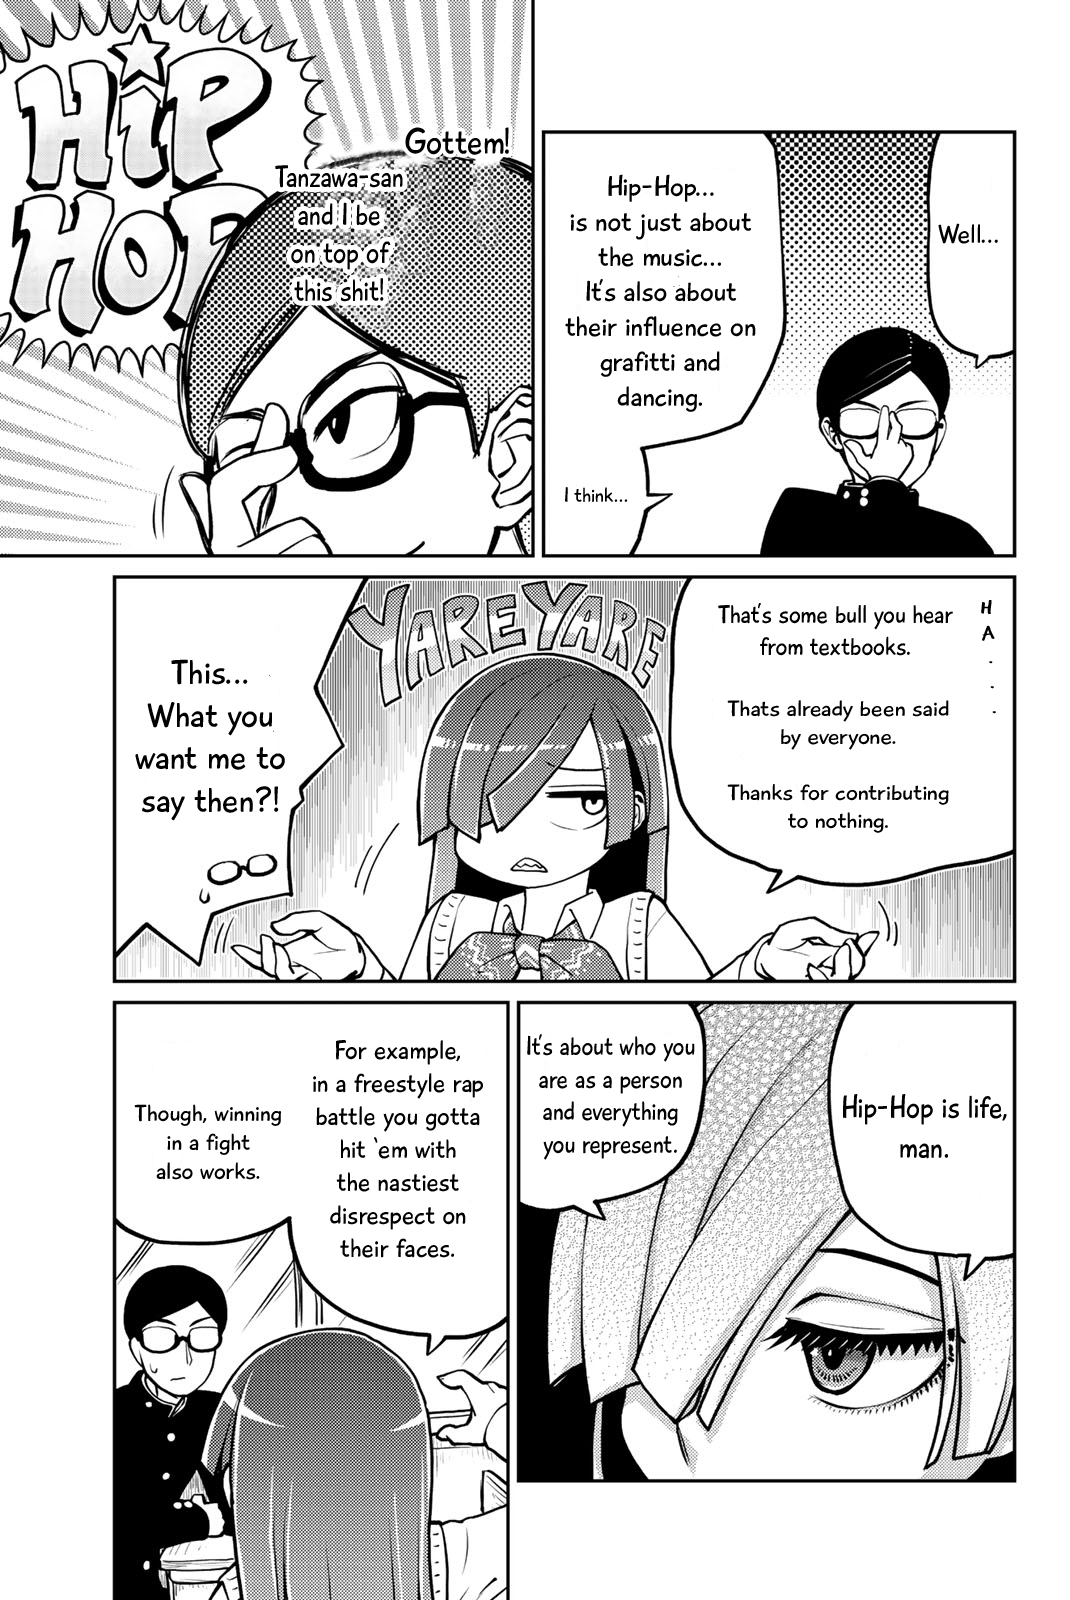 Tanzawa Sudachi Is Here! - Page 3